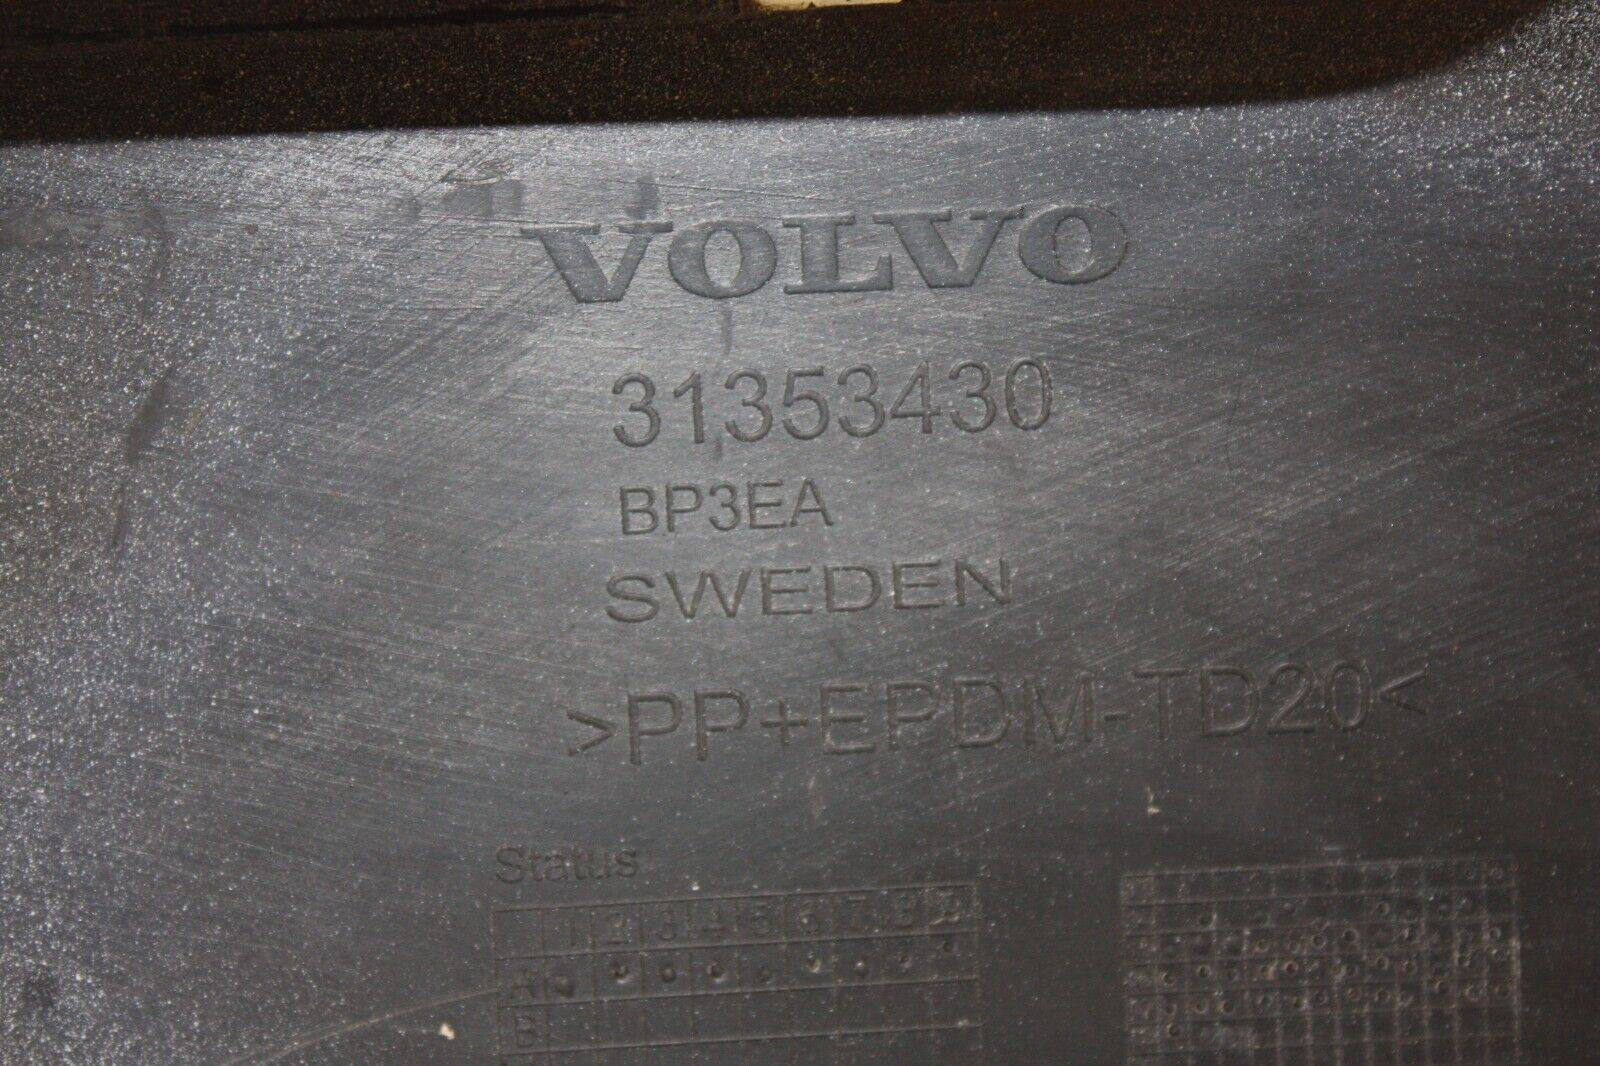 Volvo-XC90-Rear-Bumper-Lower-Section-2015-Onwards-31353430-Genuine-175626361630-9